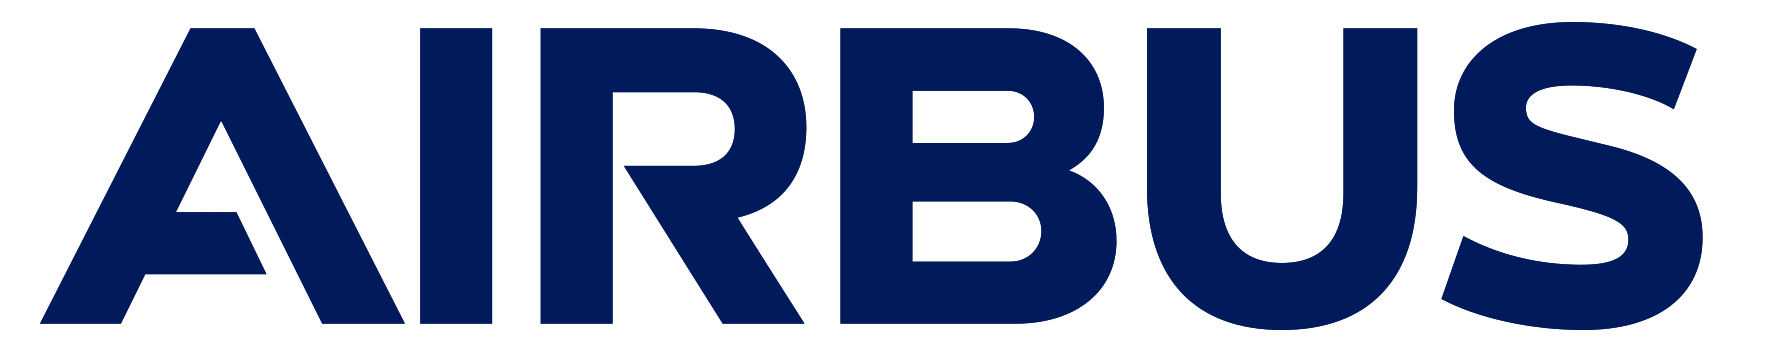 Airbus Group Logo Png 1